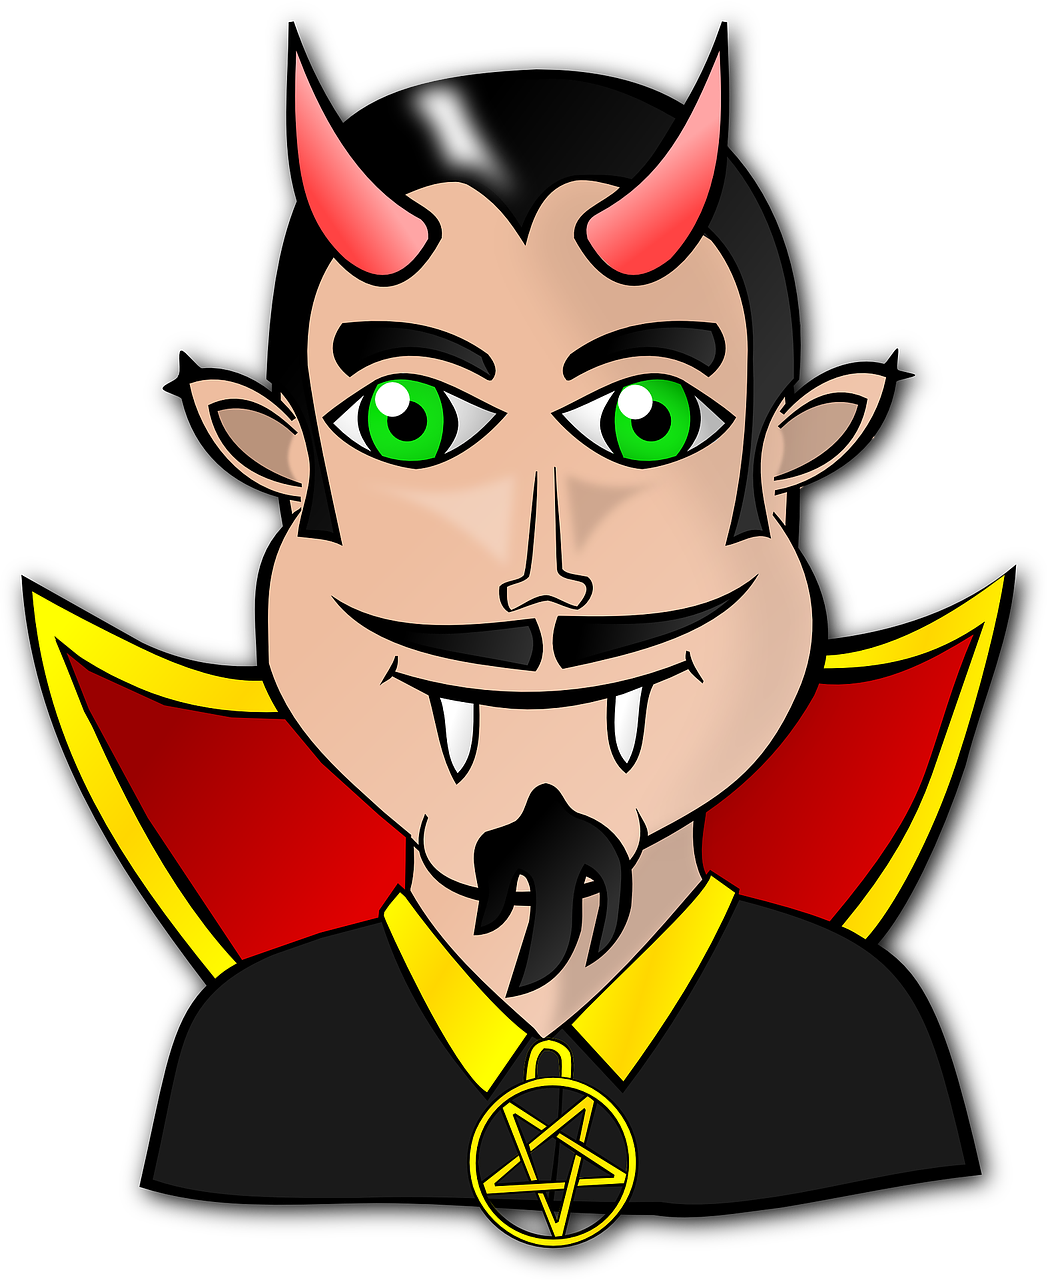 Free to Use & Public Domain Dracula Clip Art